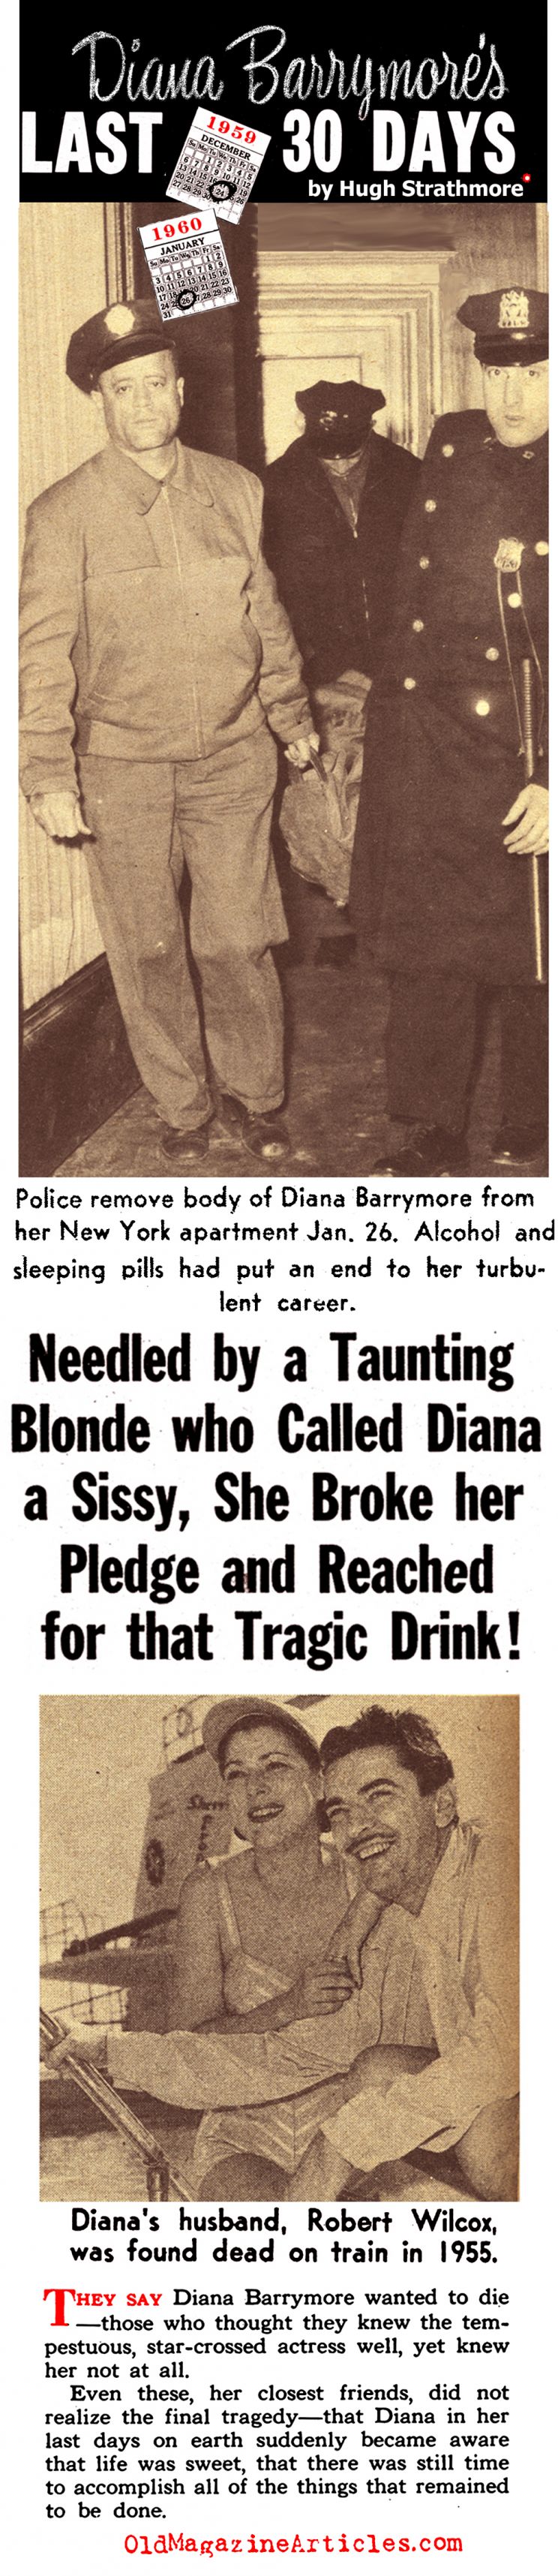 Diana Barrymore